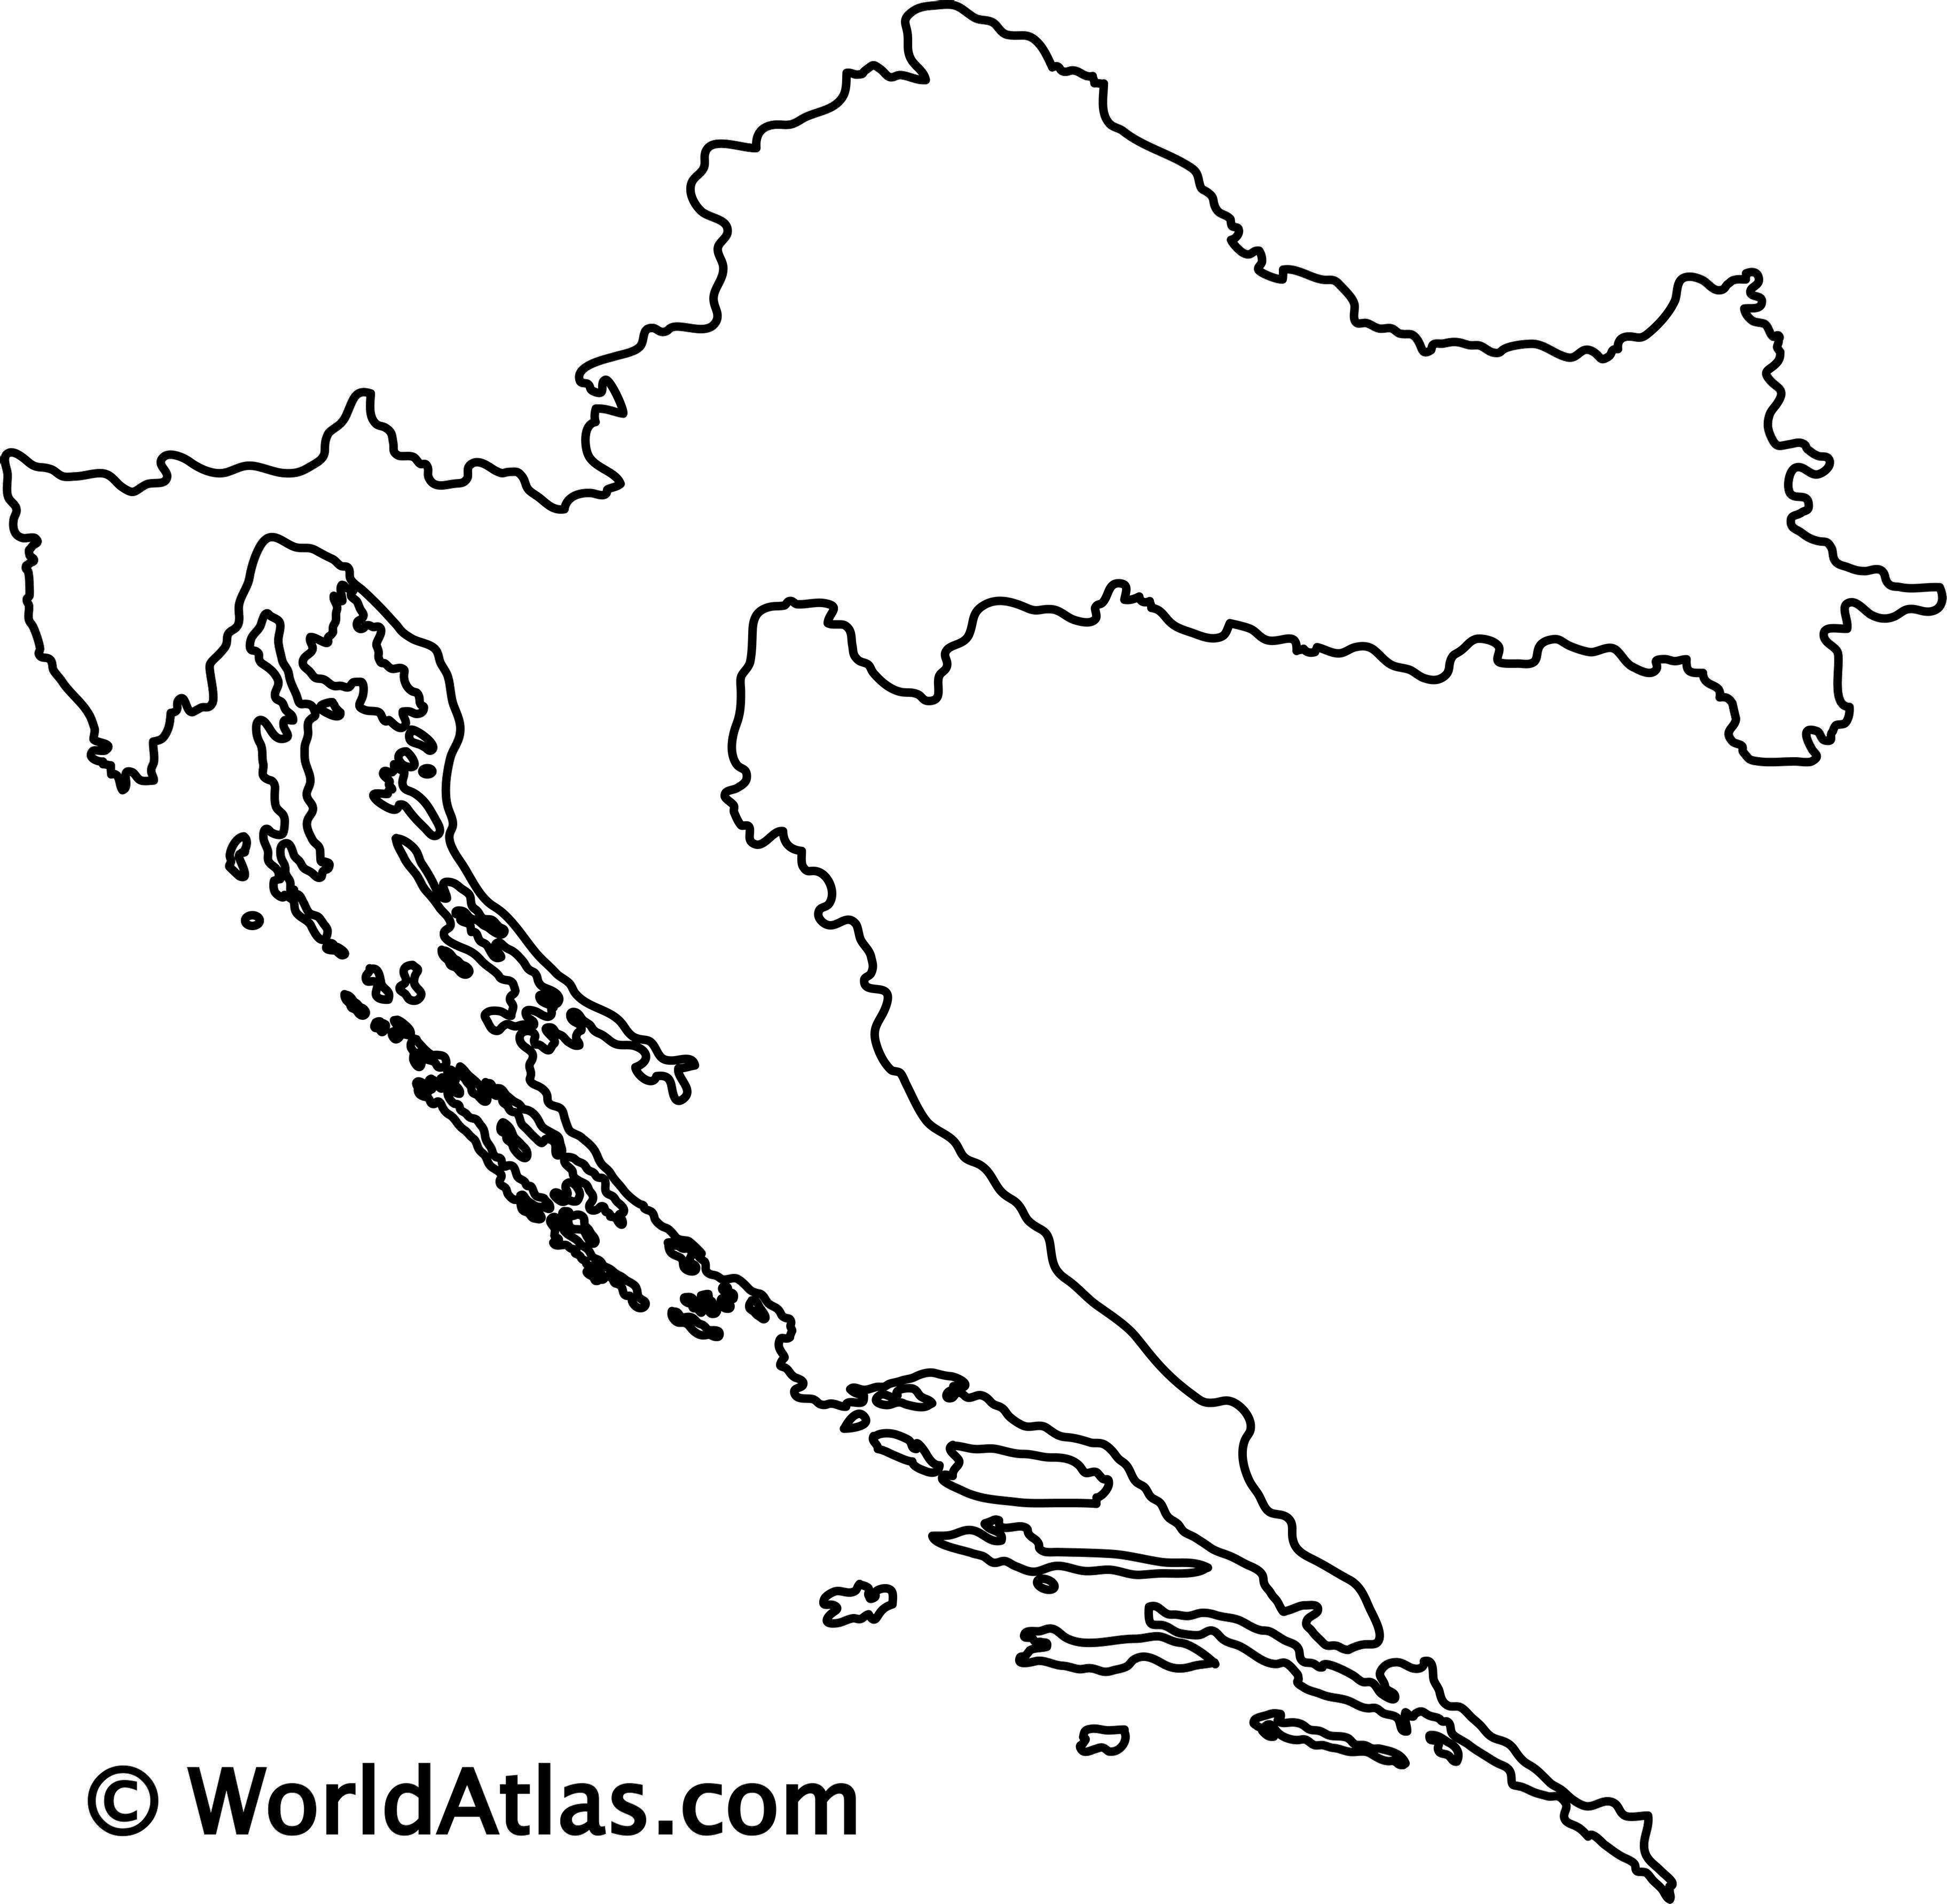 Croatia Maps Facts World Atlas